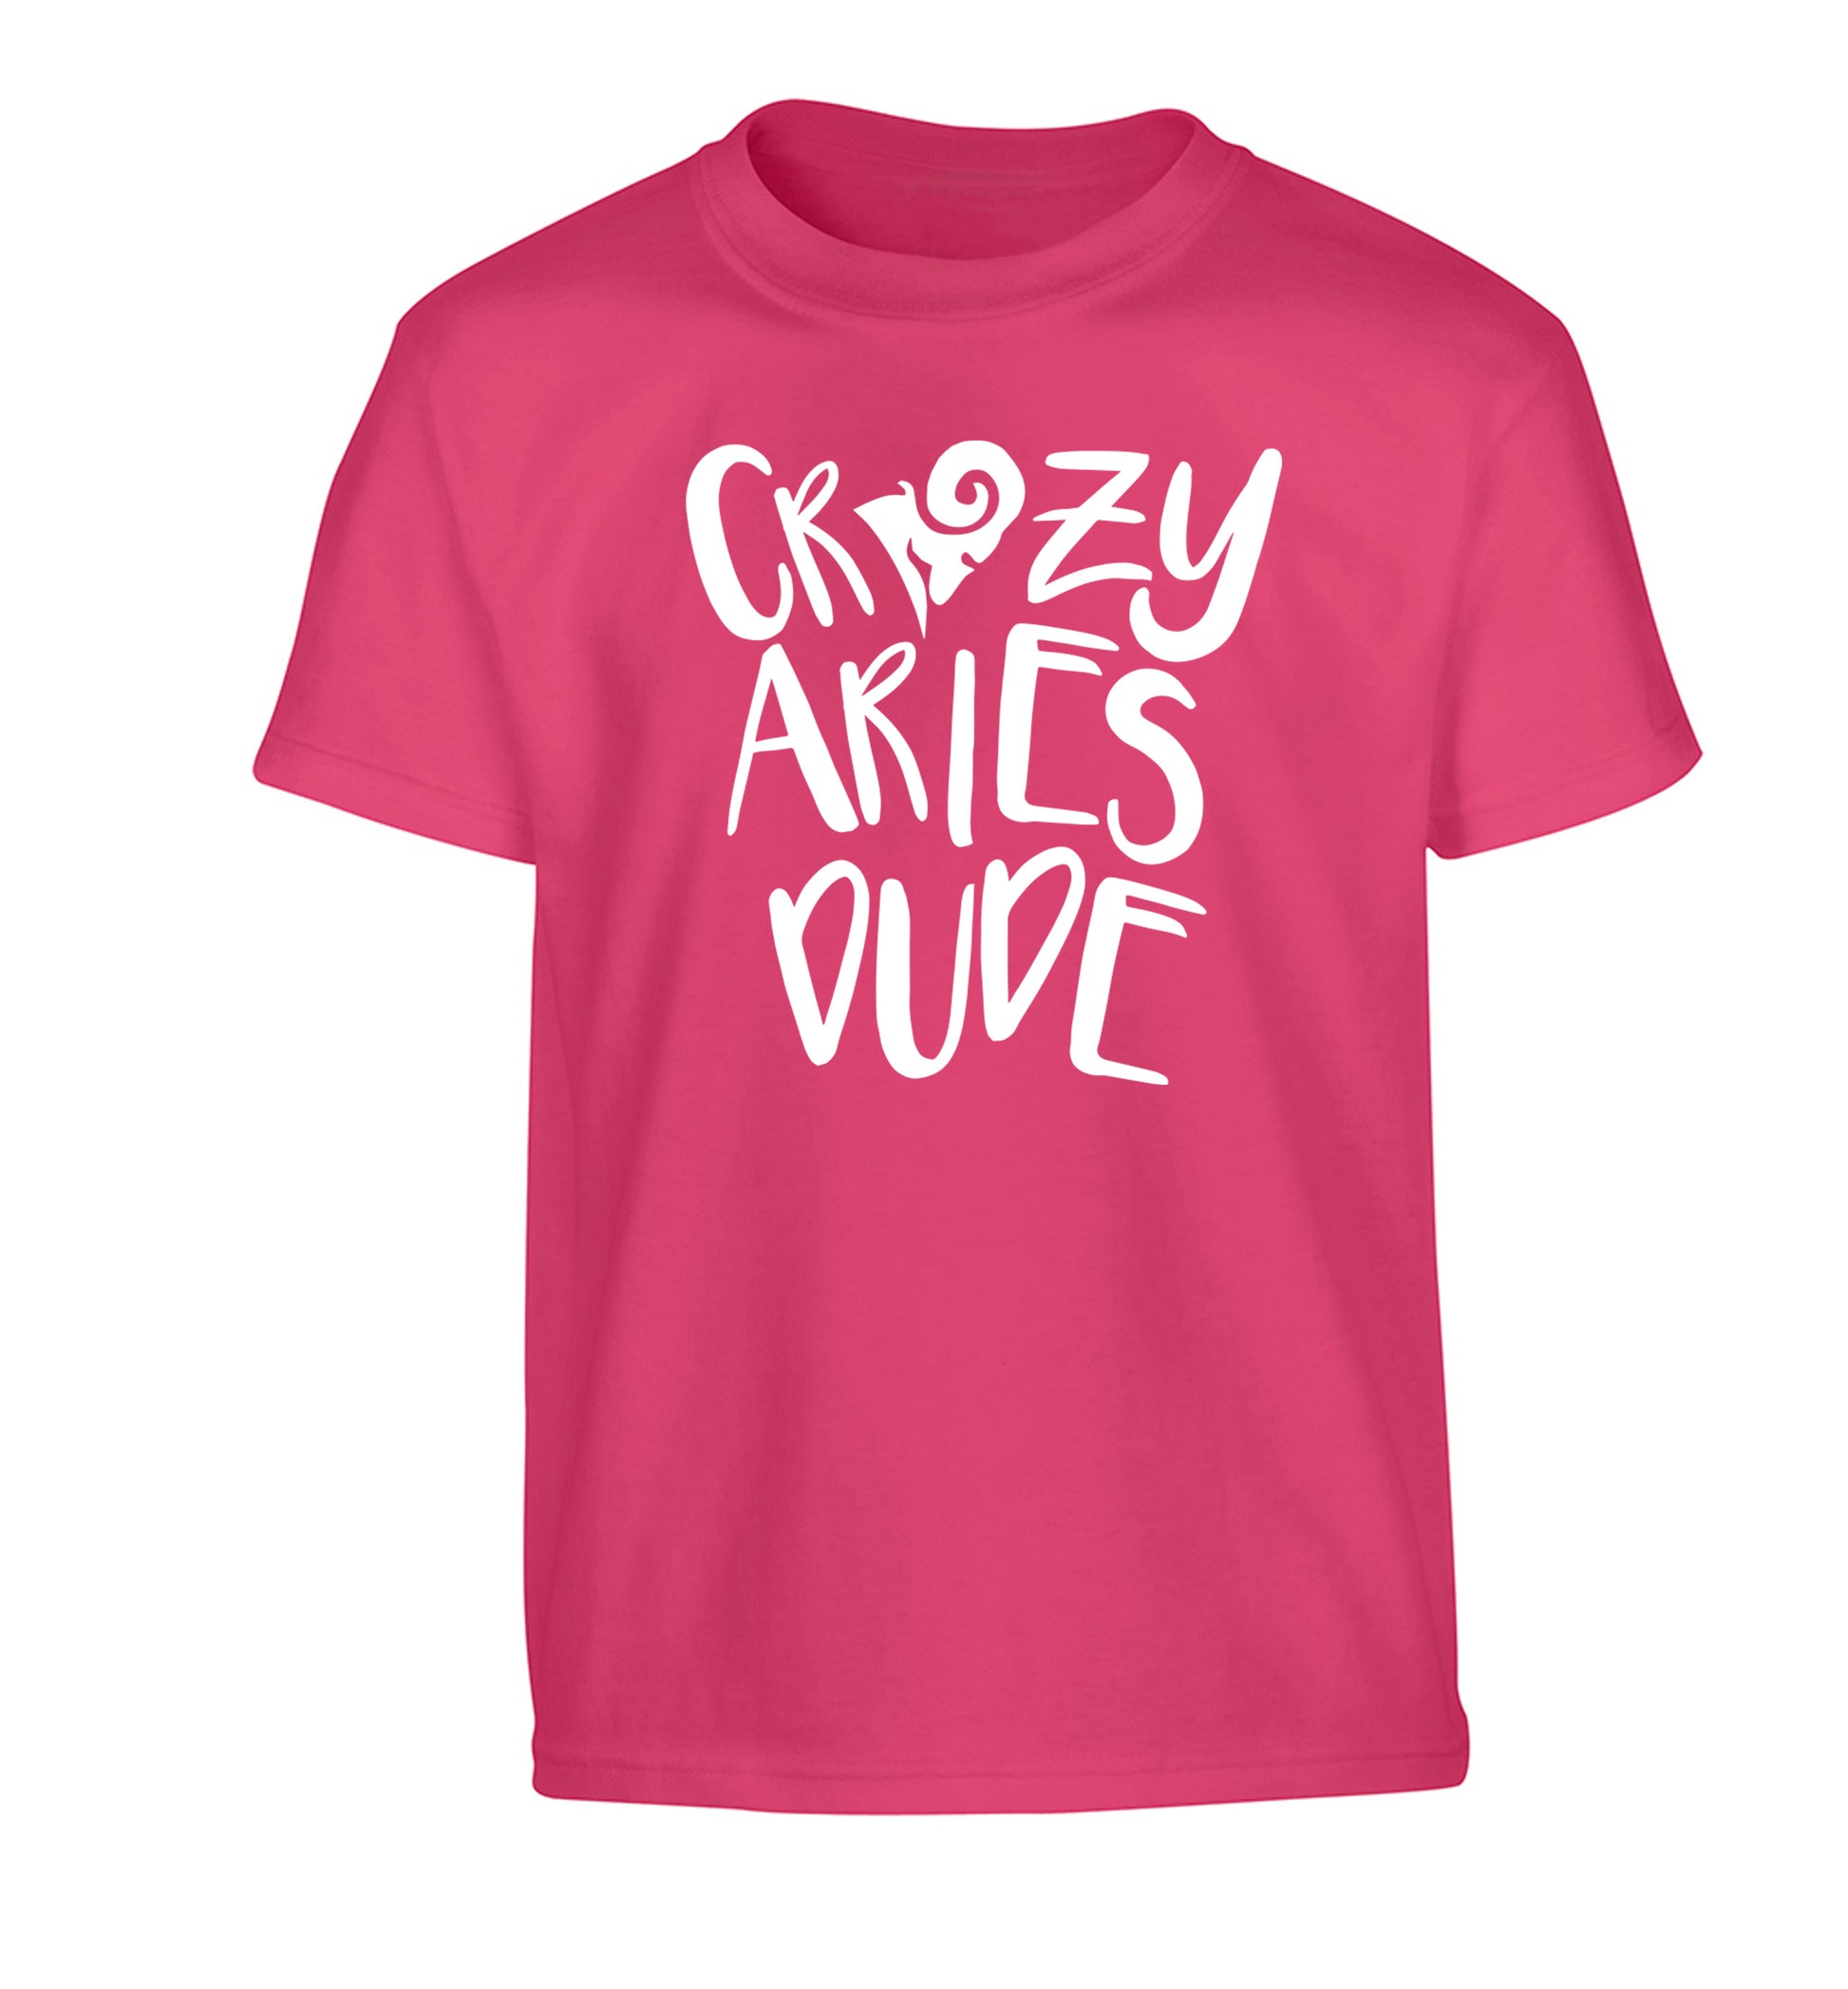 Crazy aries dude Children's pink Tshirt 12-13 Years